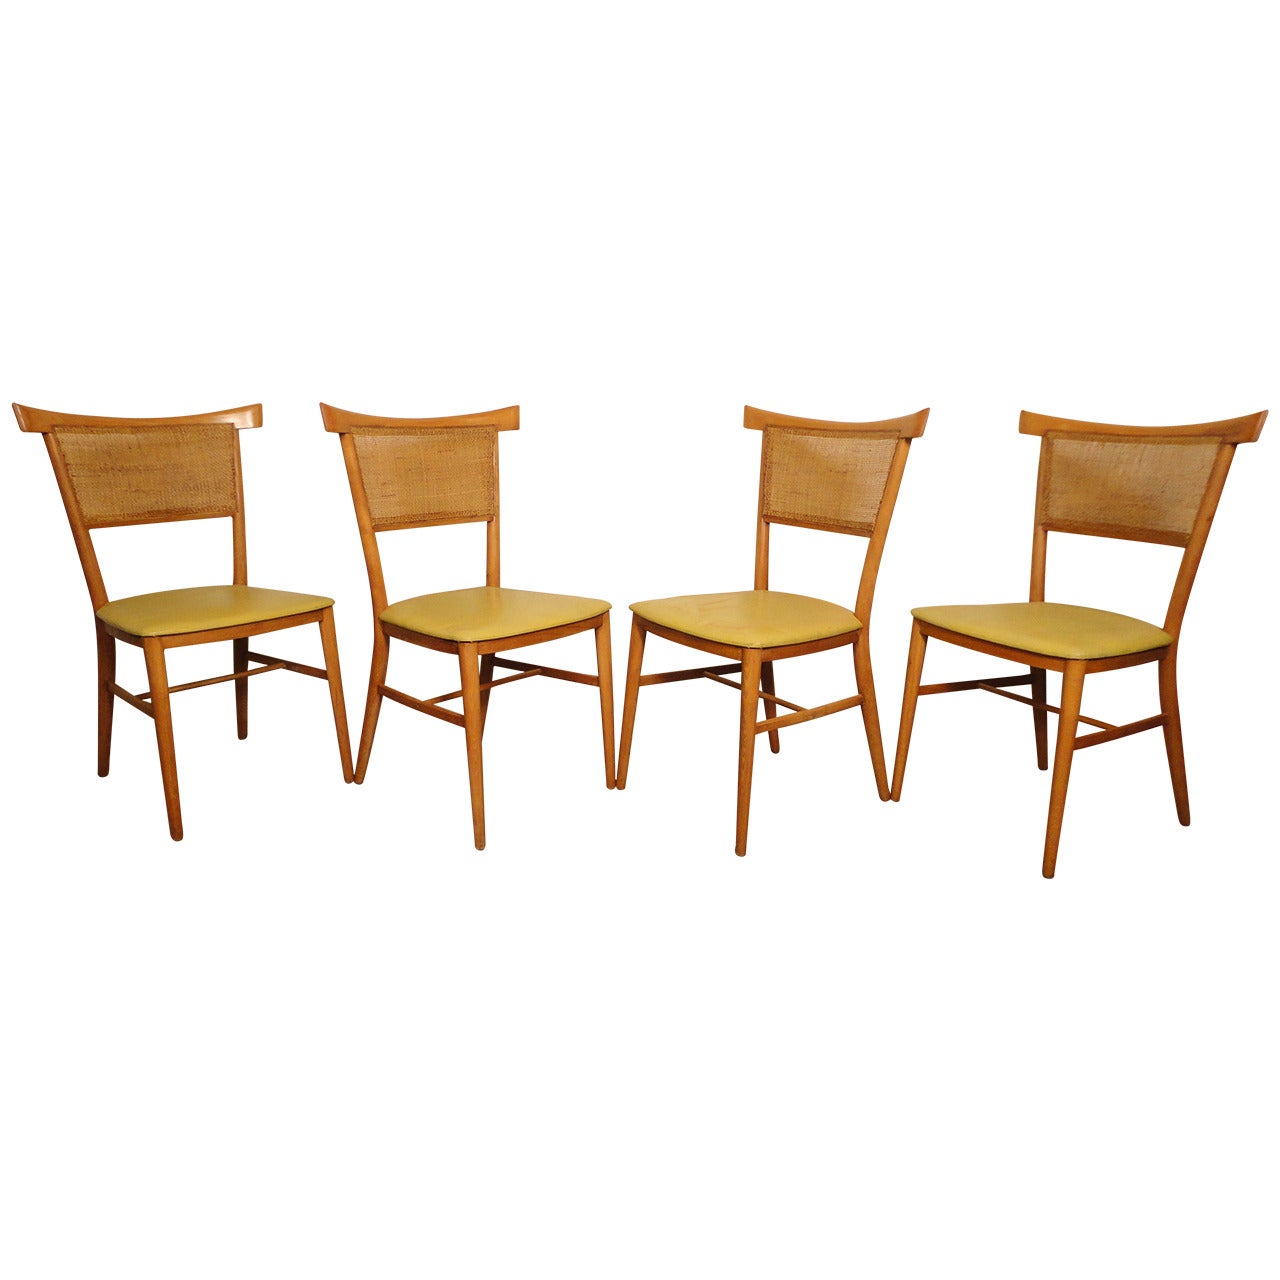 Paul McCobb "Bow Tie" Chairs